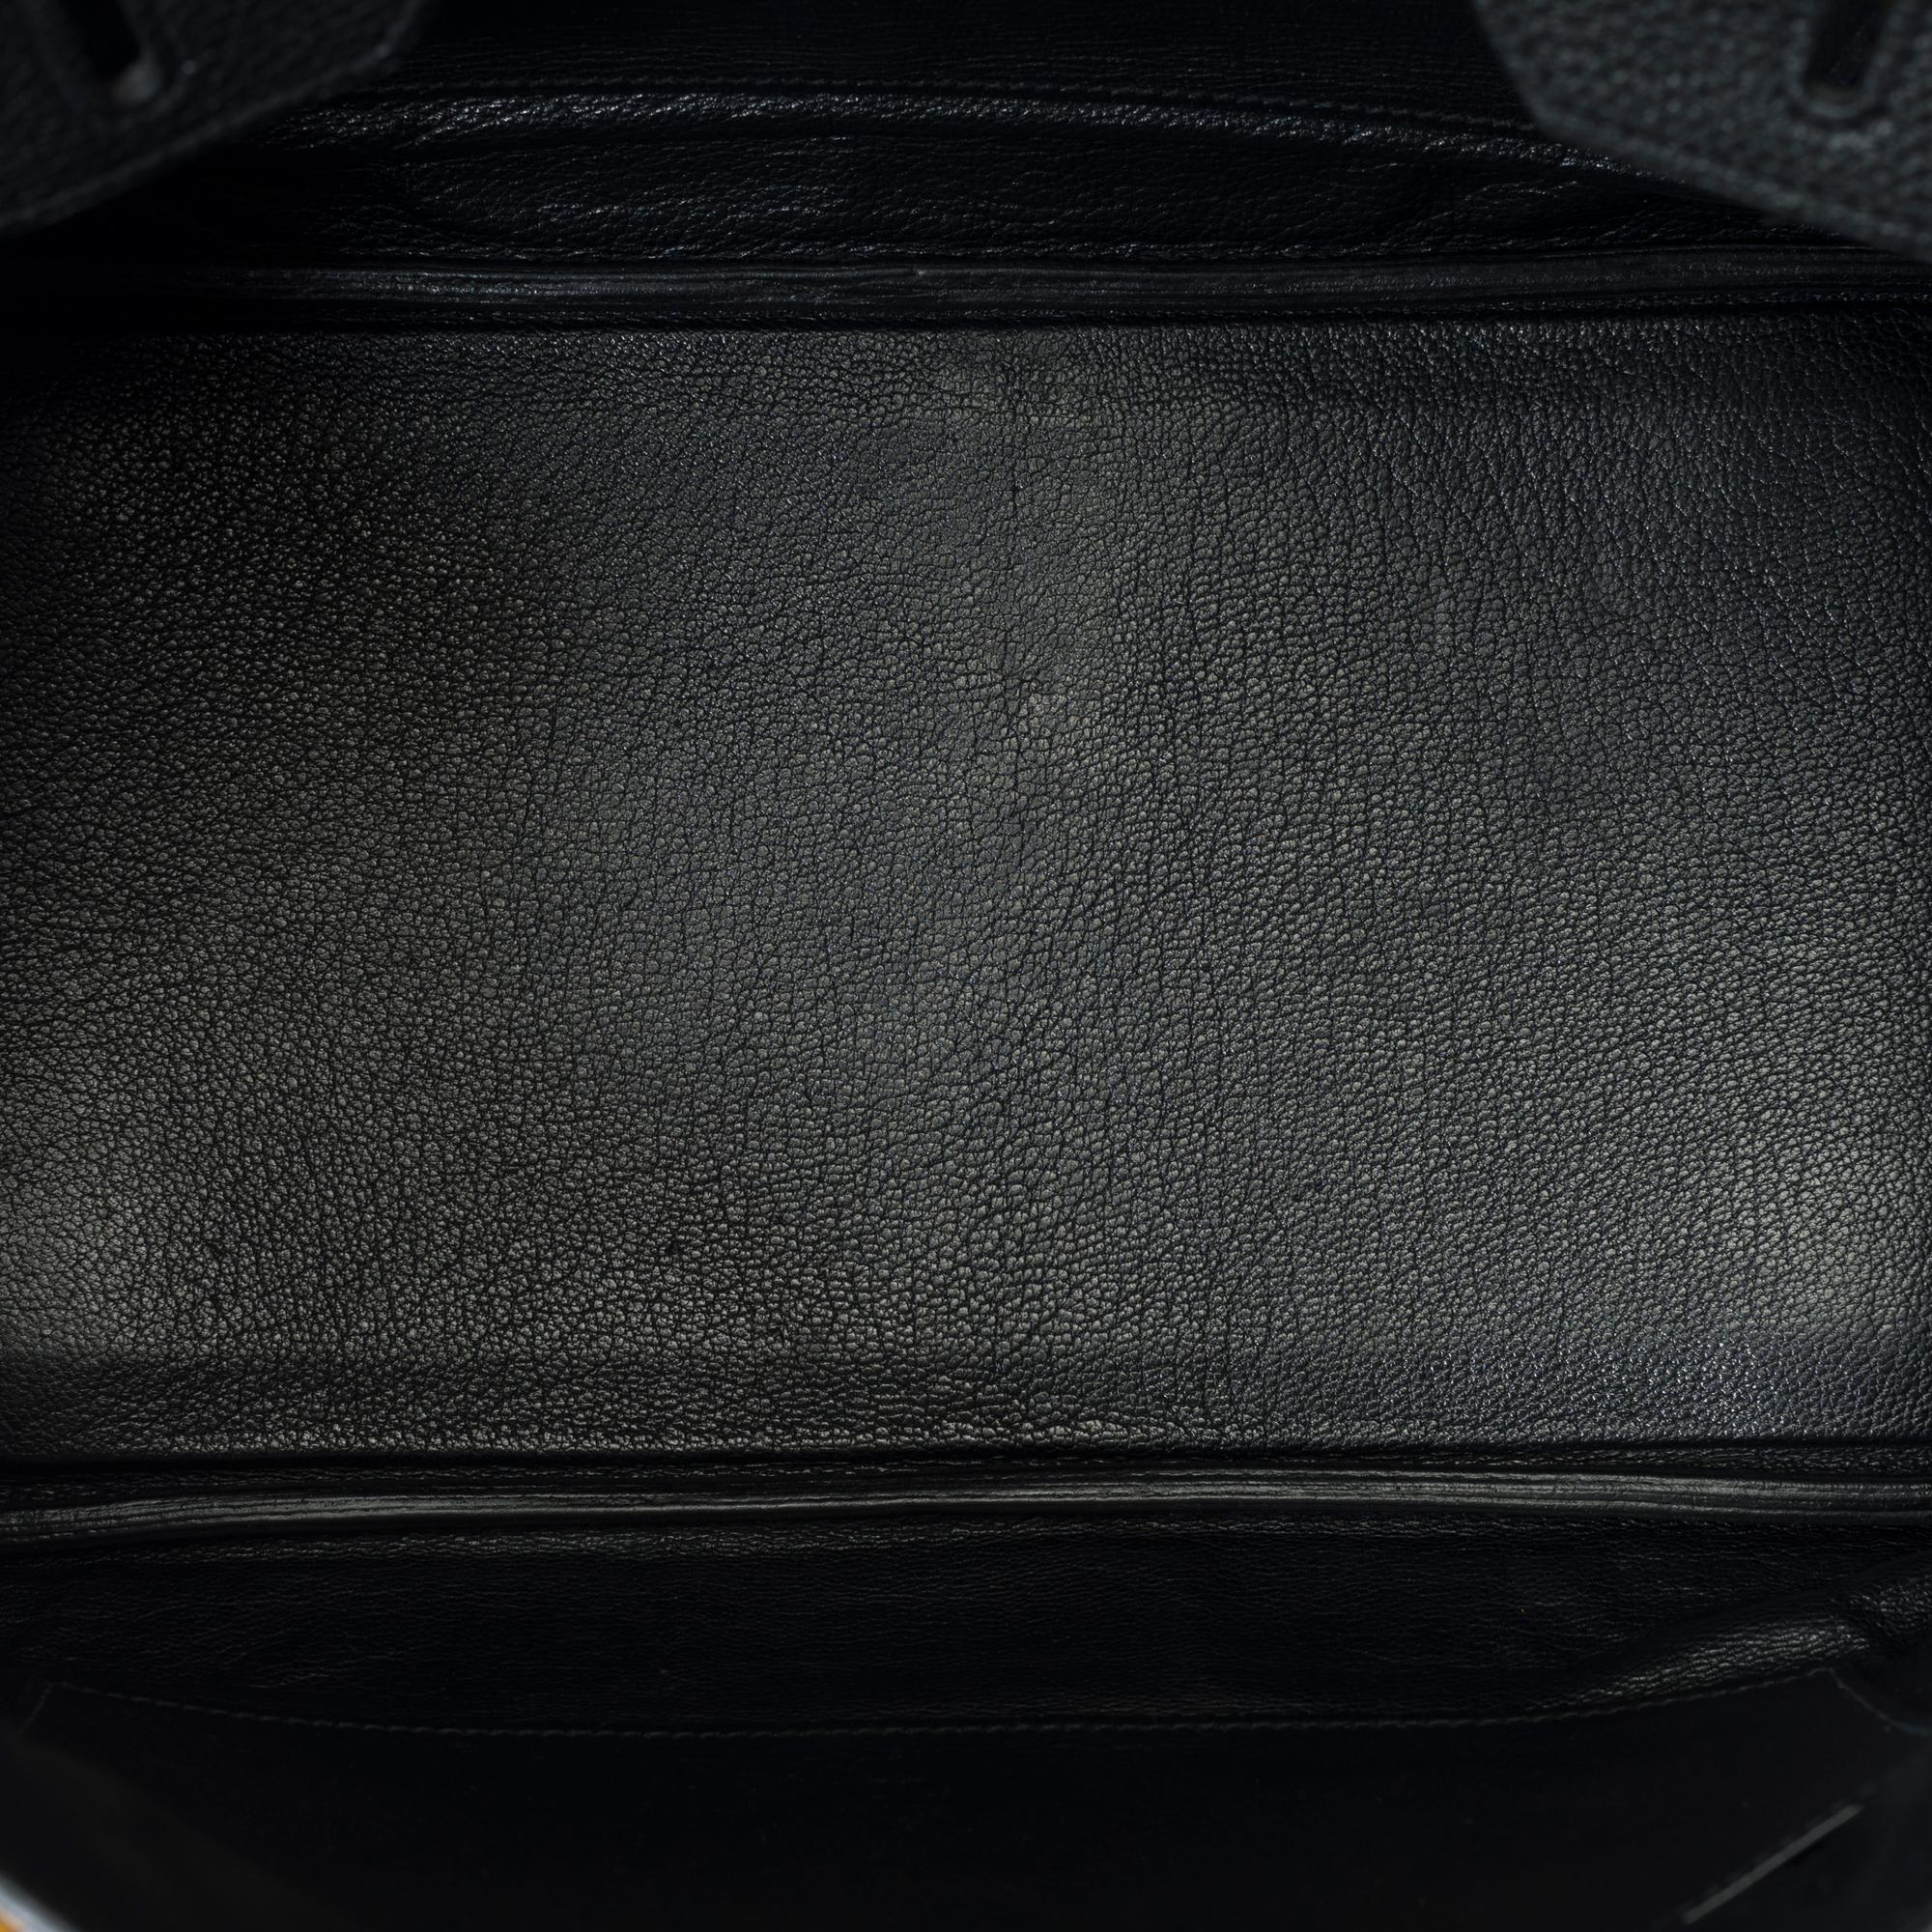 Stunning Hermes Birkin 30 handbag in Black Togo leather, GHW 6